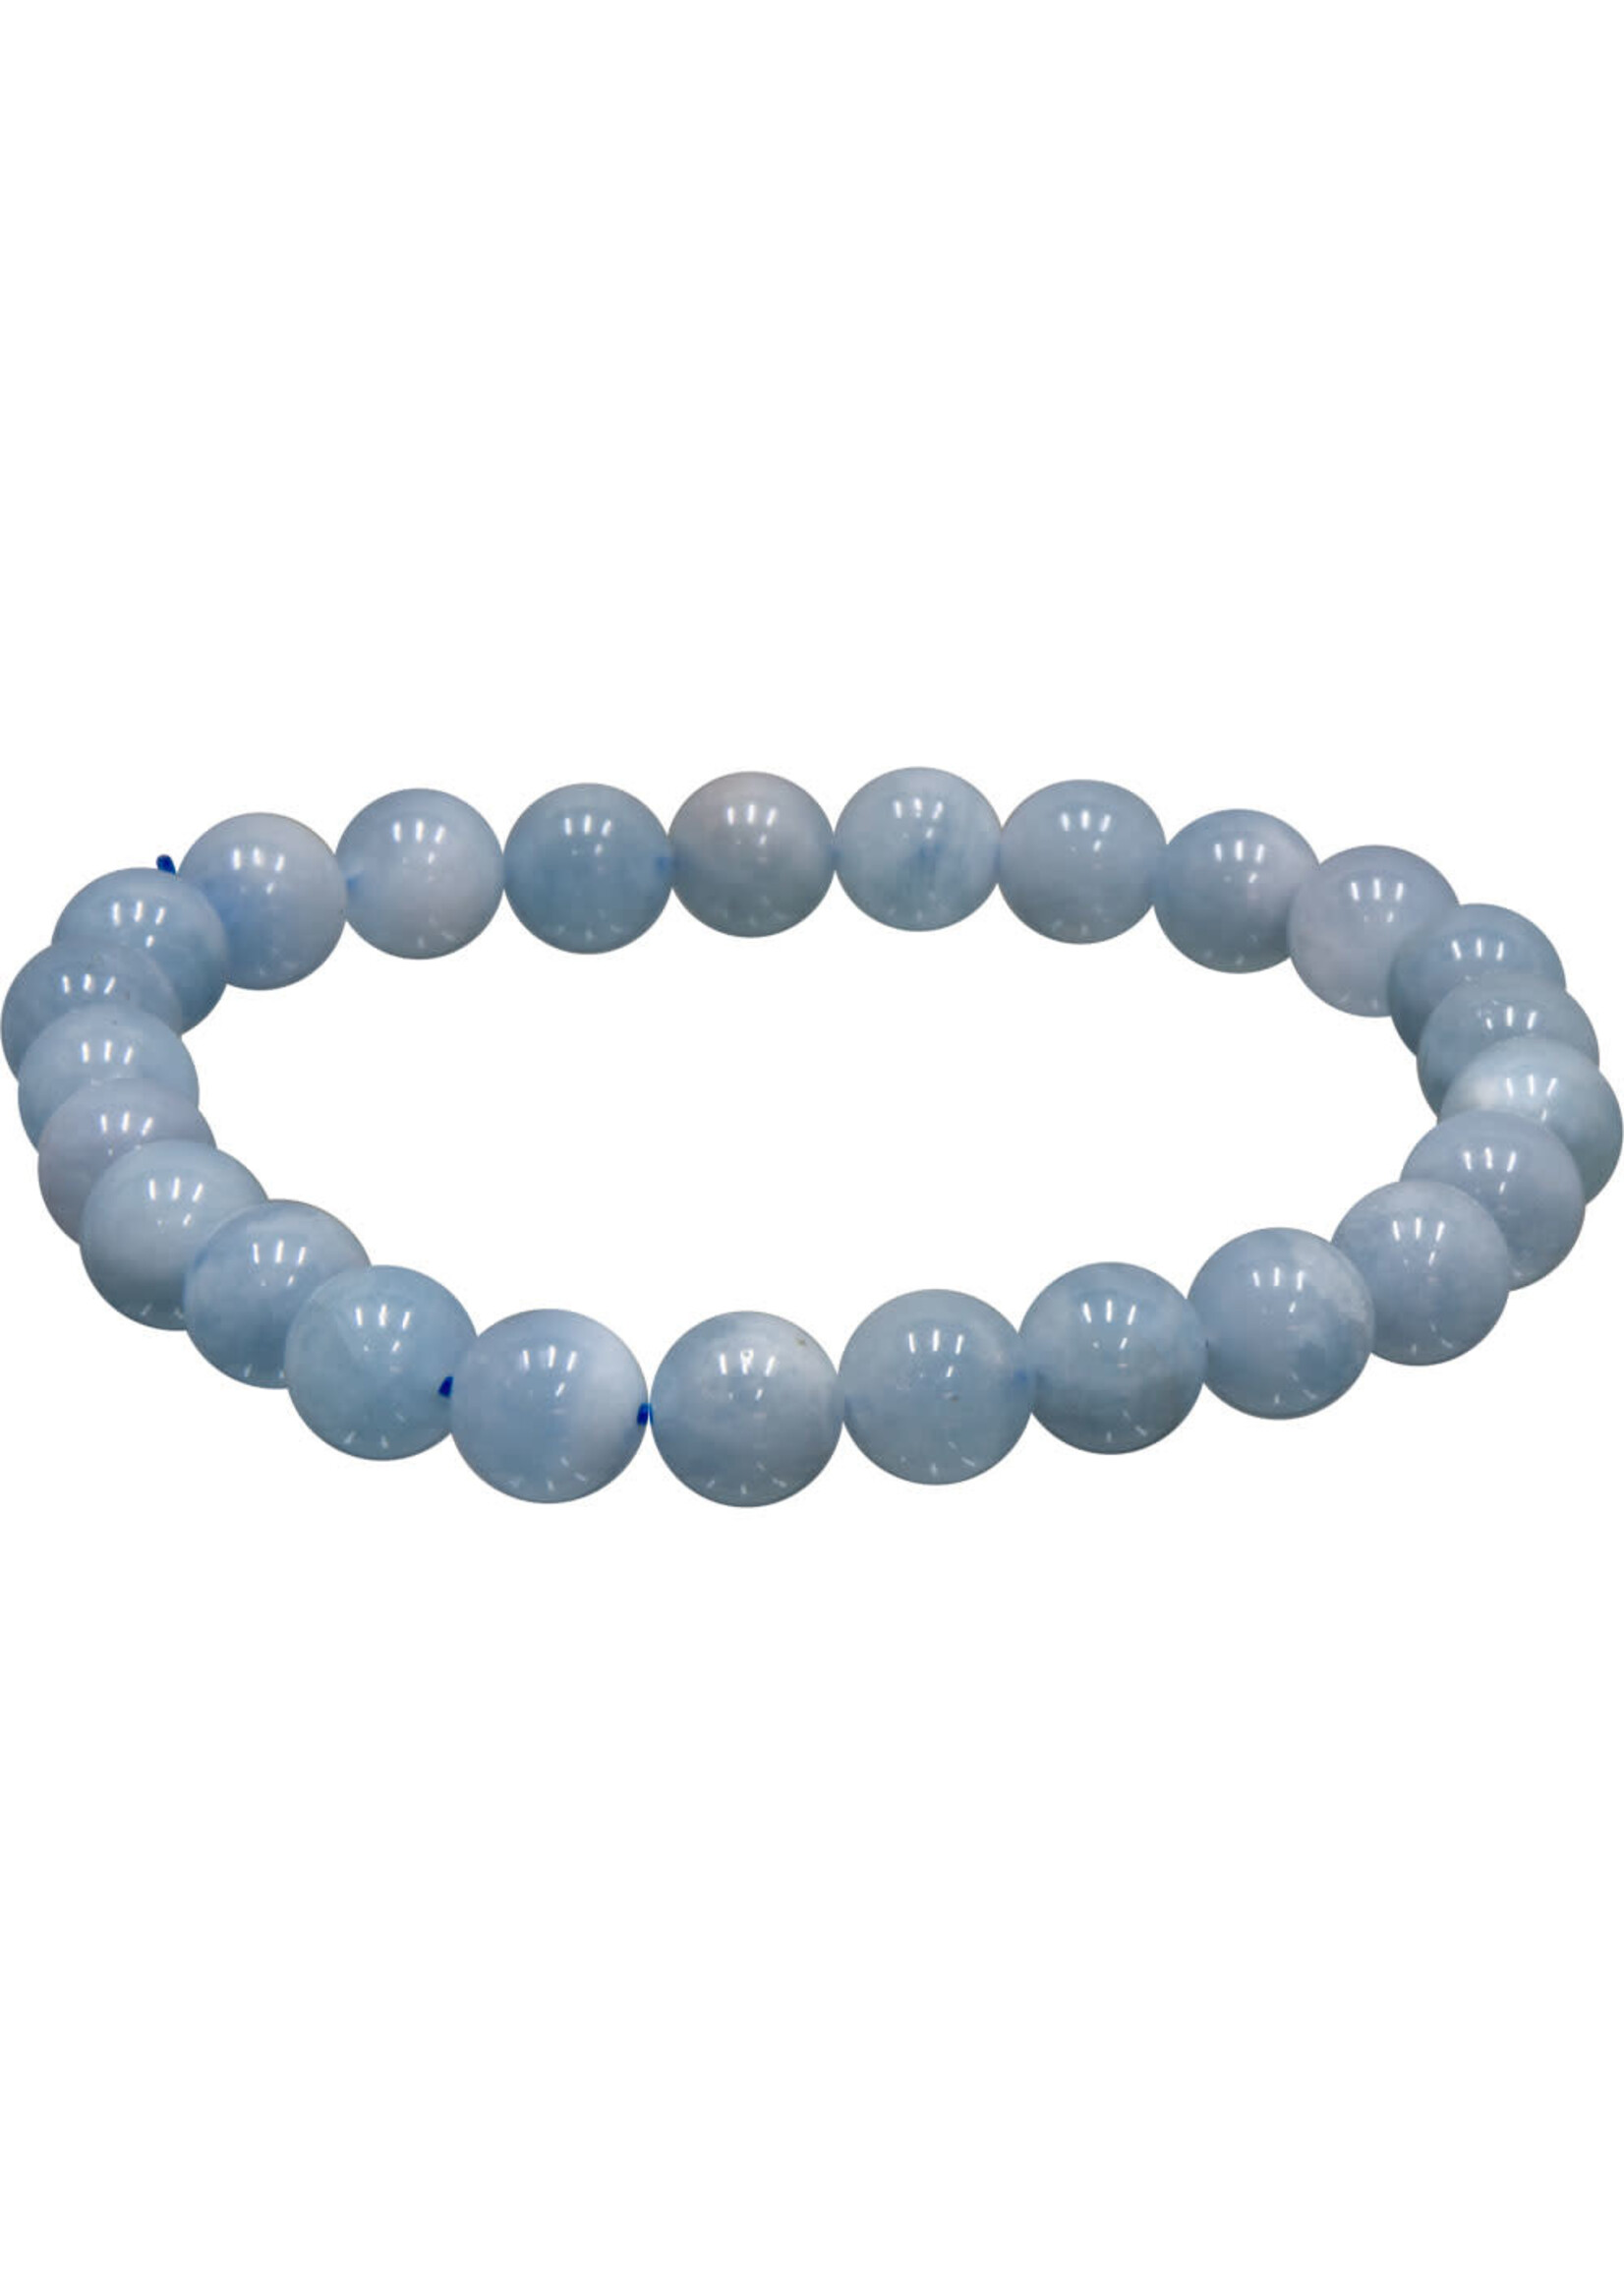 6-8 mm Elastic Stone Bracelet - Aquamarine